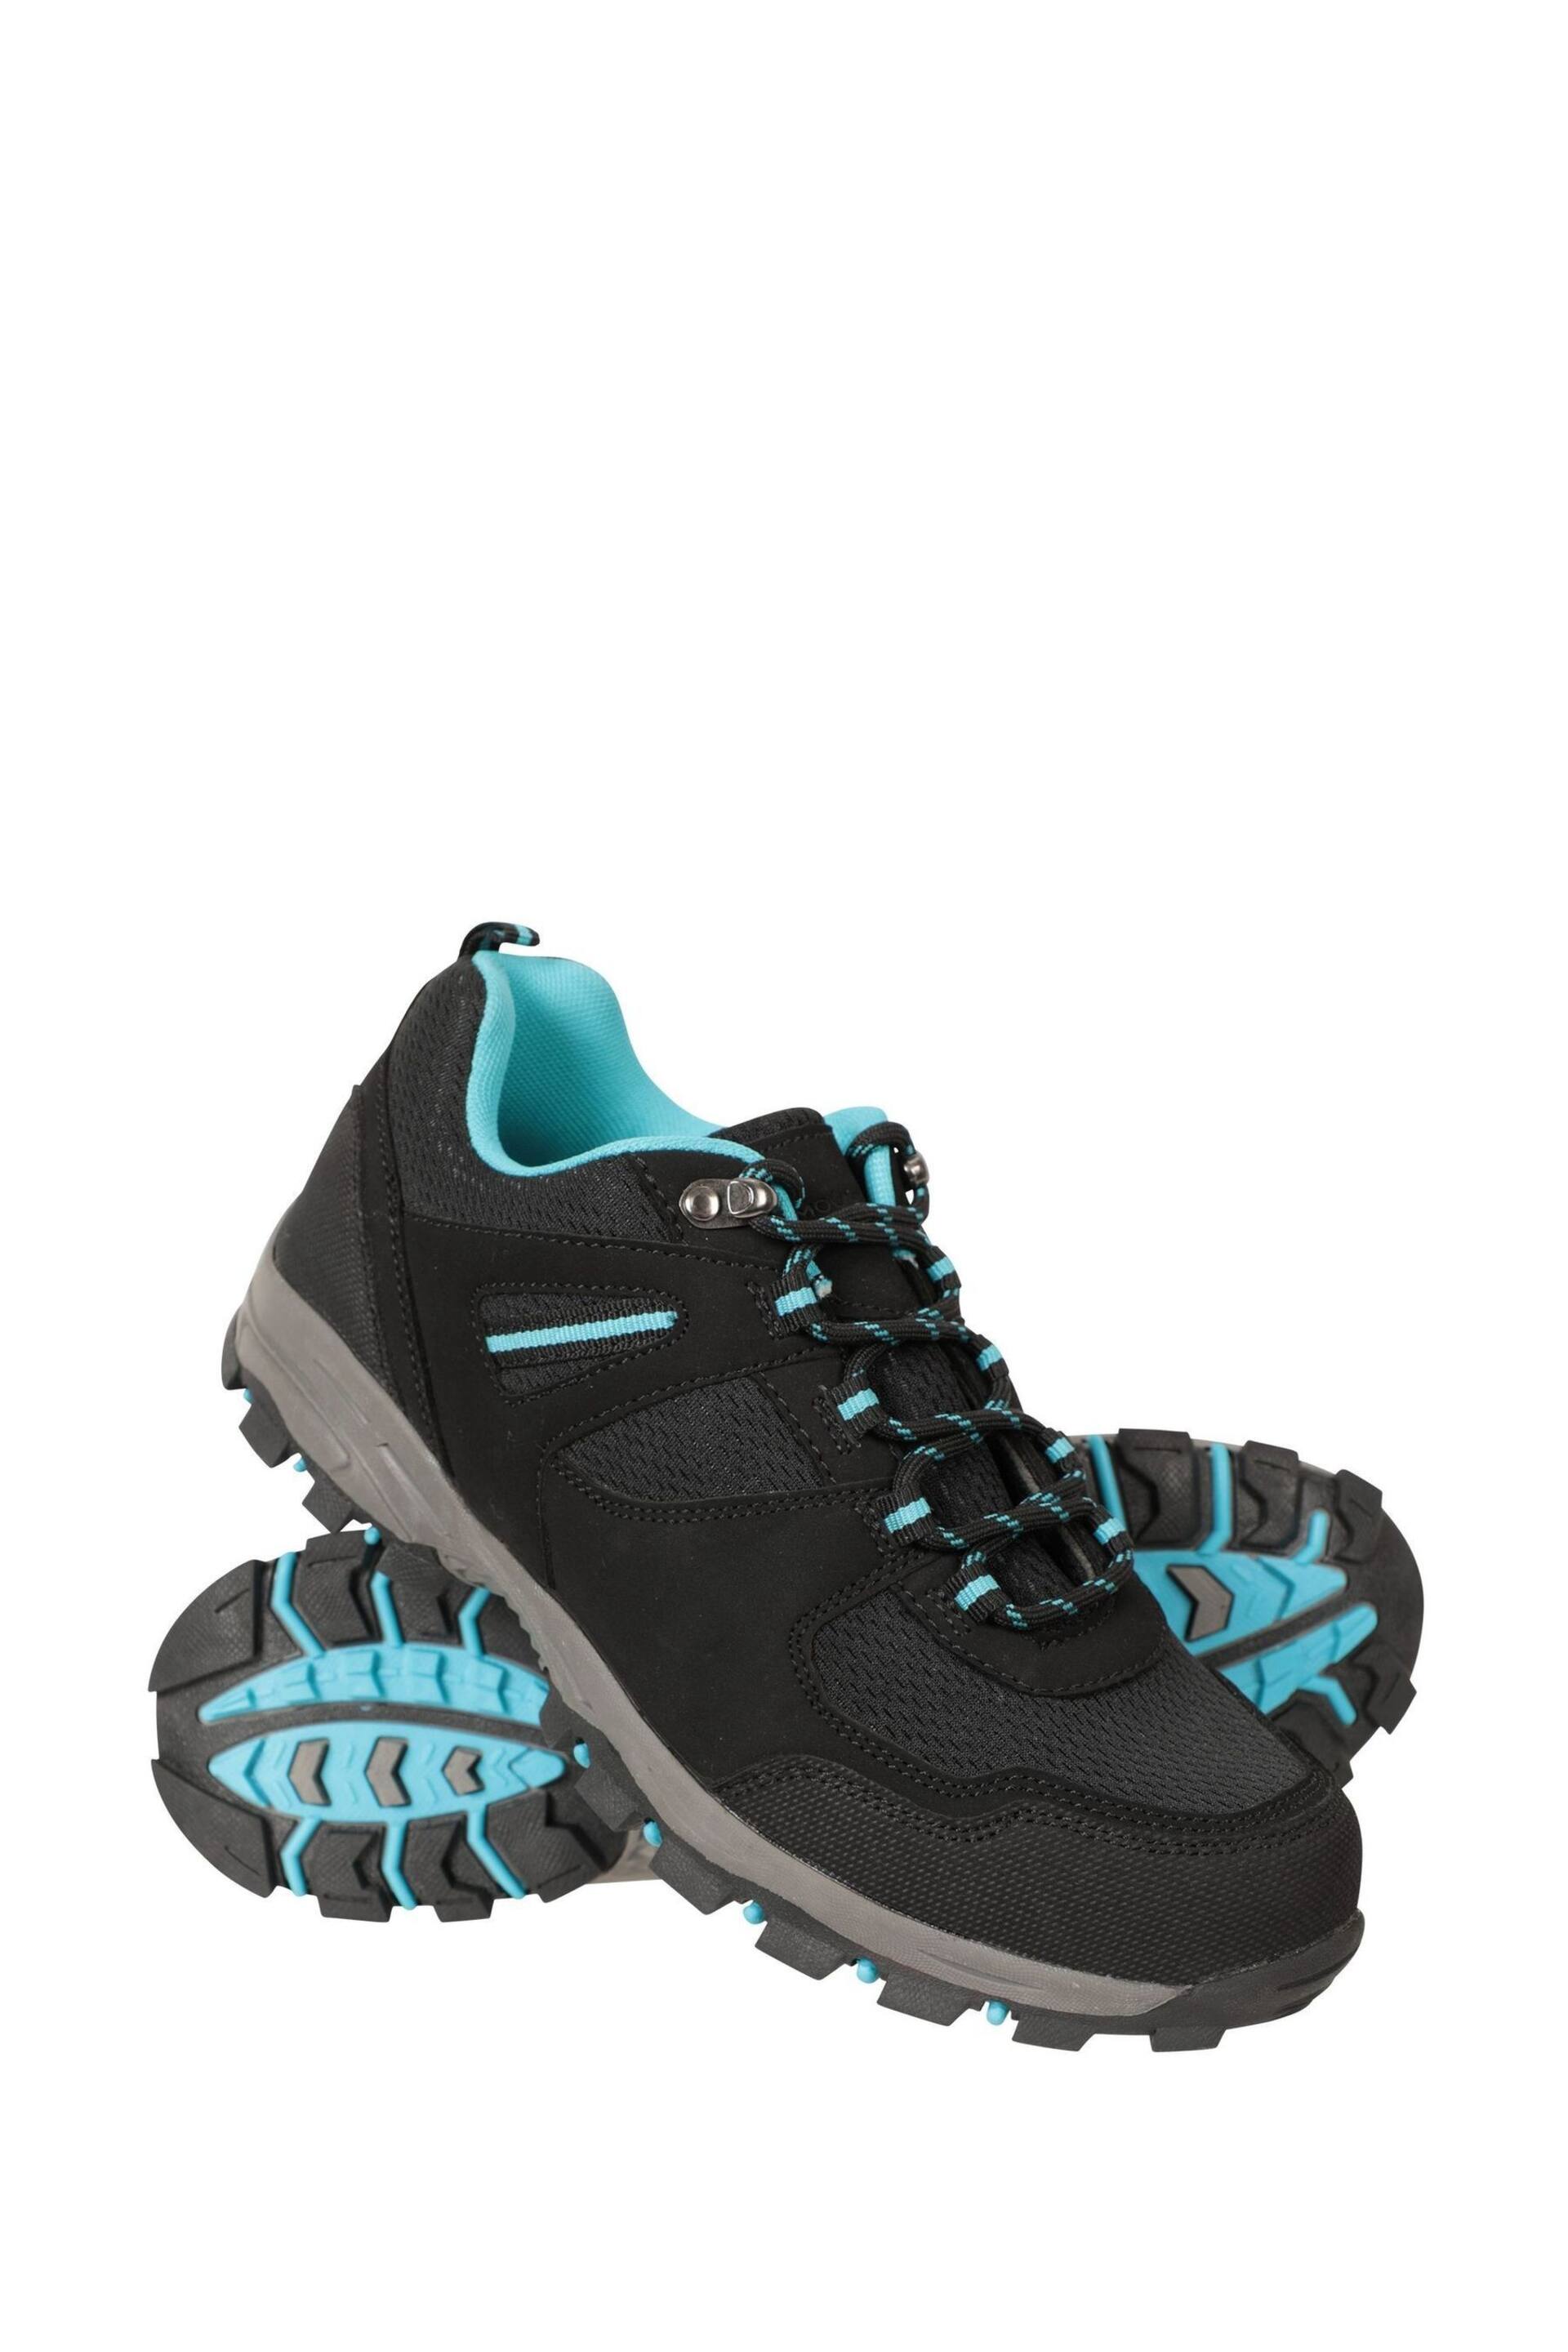 Mountain Warehouse Black Womens Mcleod Walking Shoes - Image 1 of 5